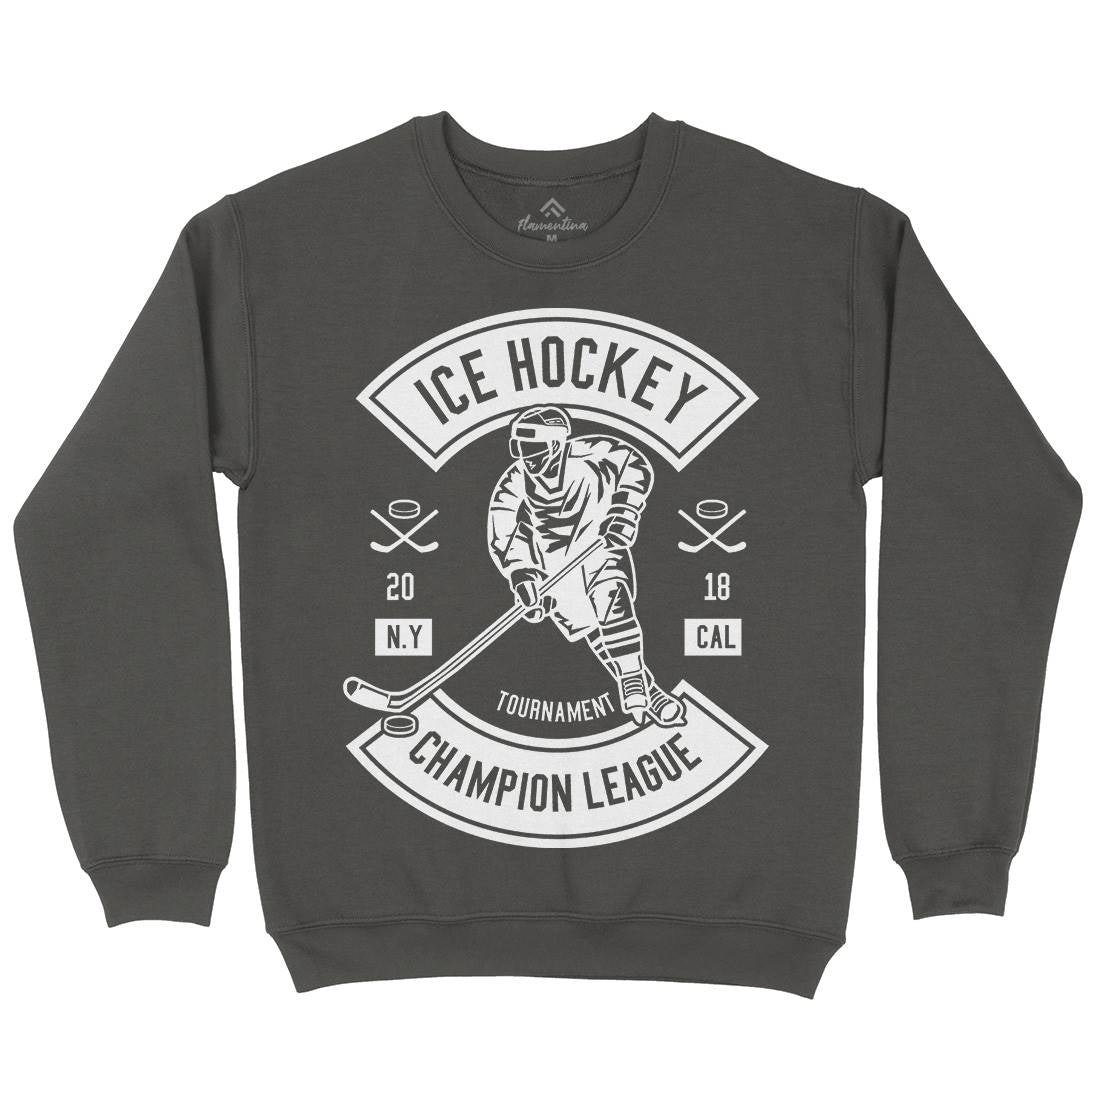 Ice Hockey Champion League Mens Crew Neck Sweatshirt Sport B564